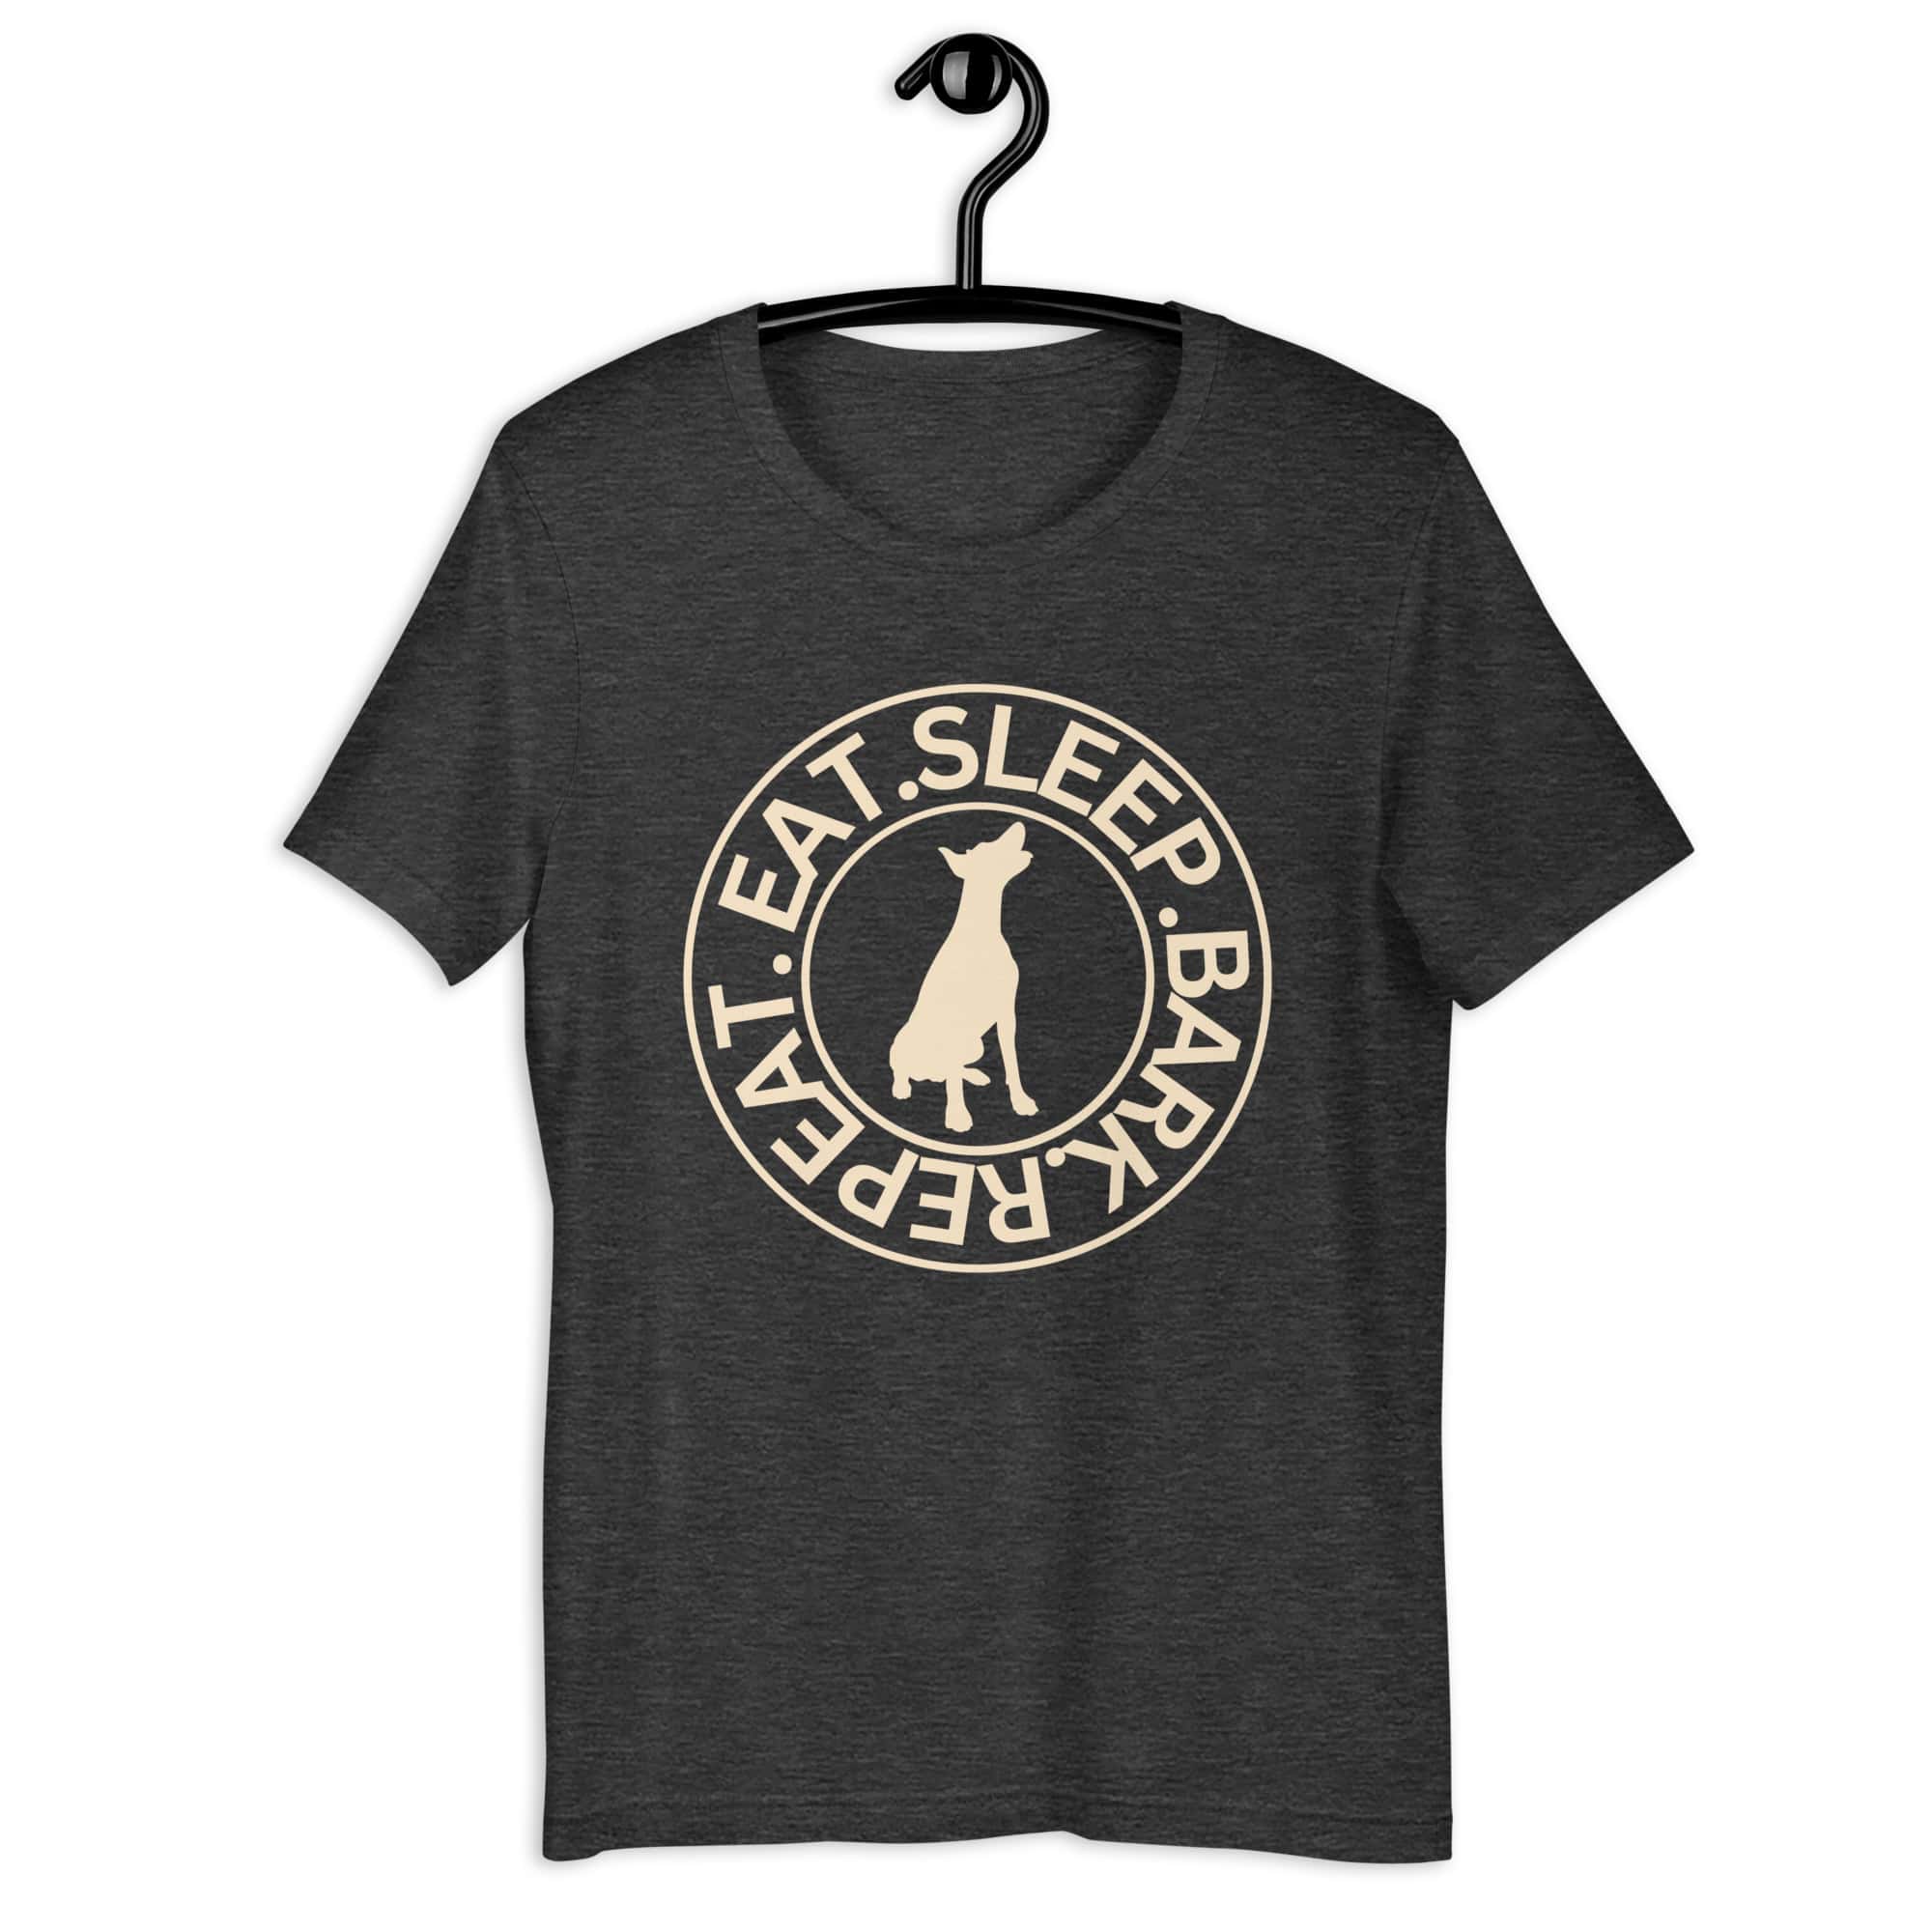 Eat Sleep Bark Repeat Terrier Unisex T-Shirt. Dark Grey